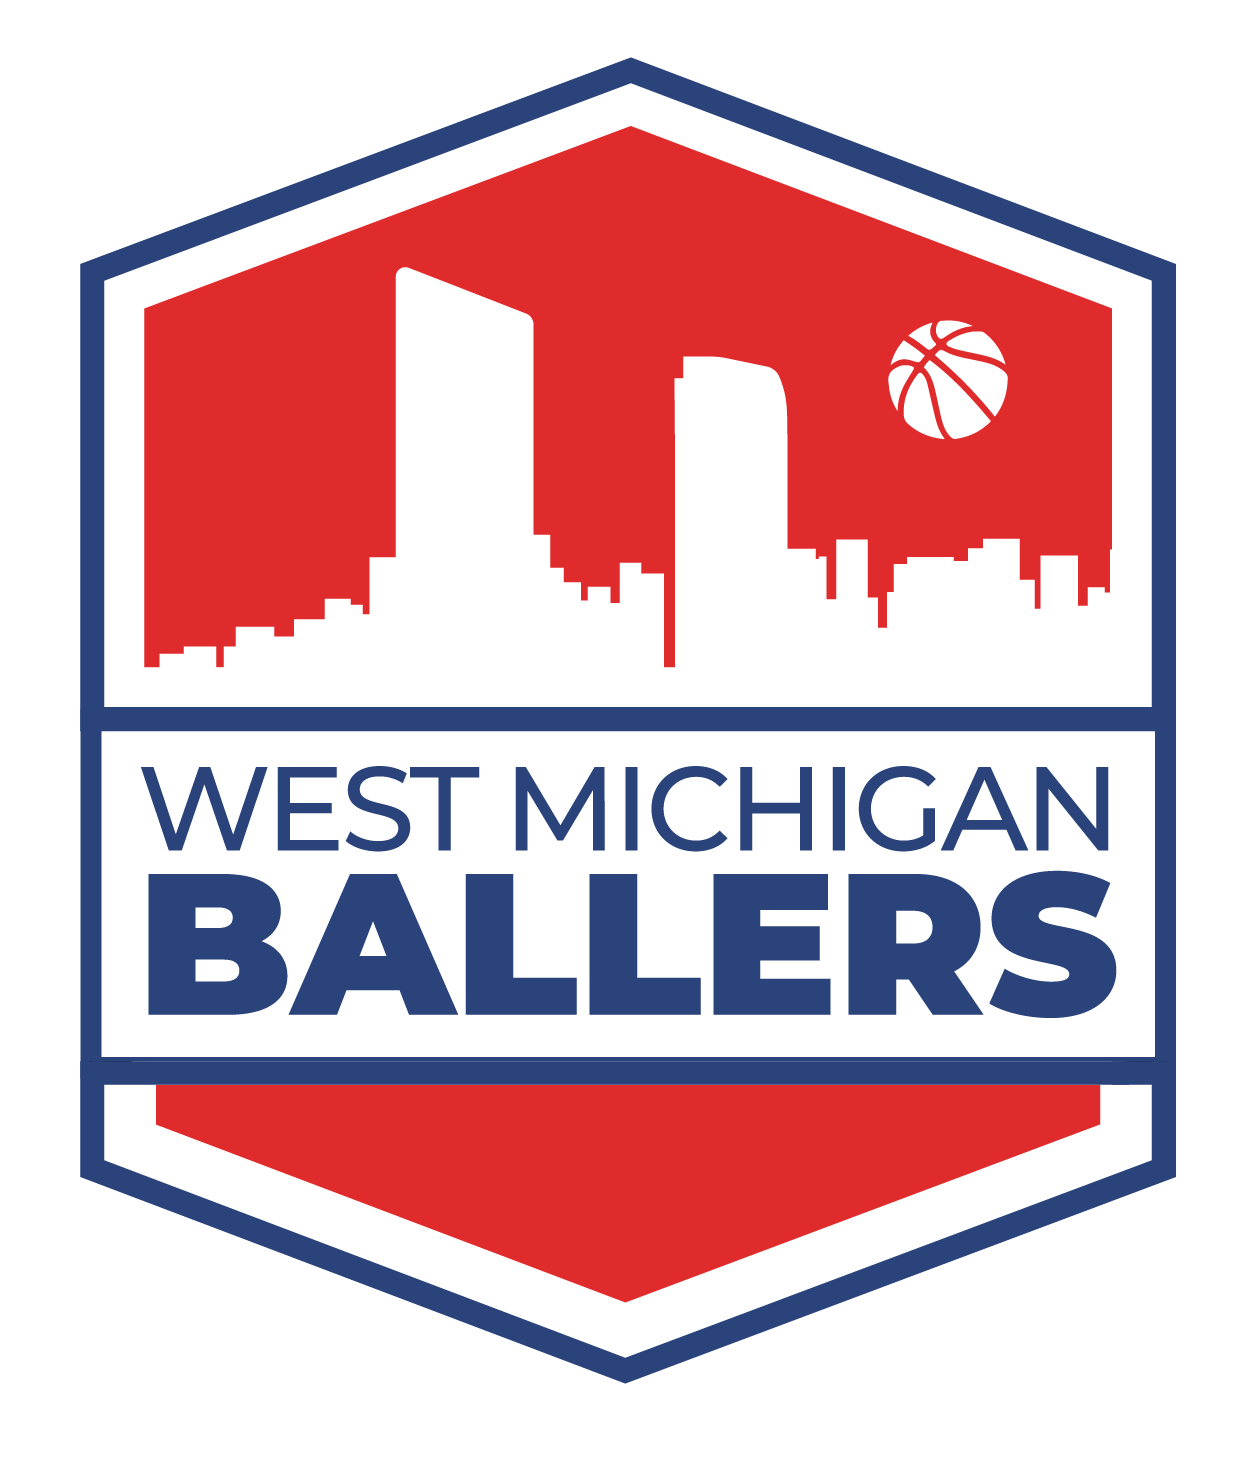 West Michigan Ballers